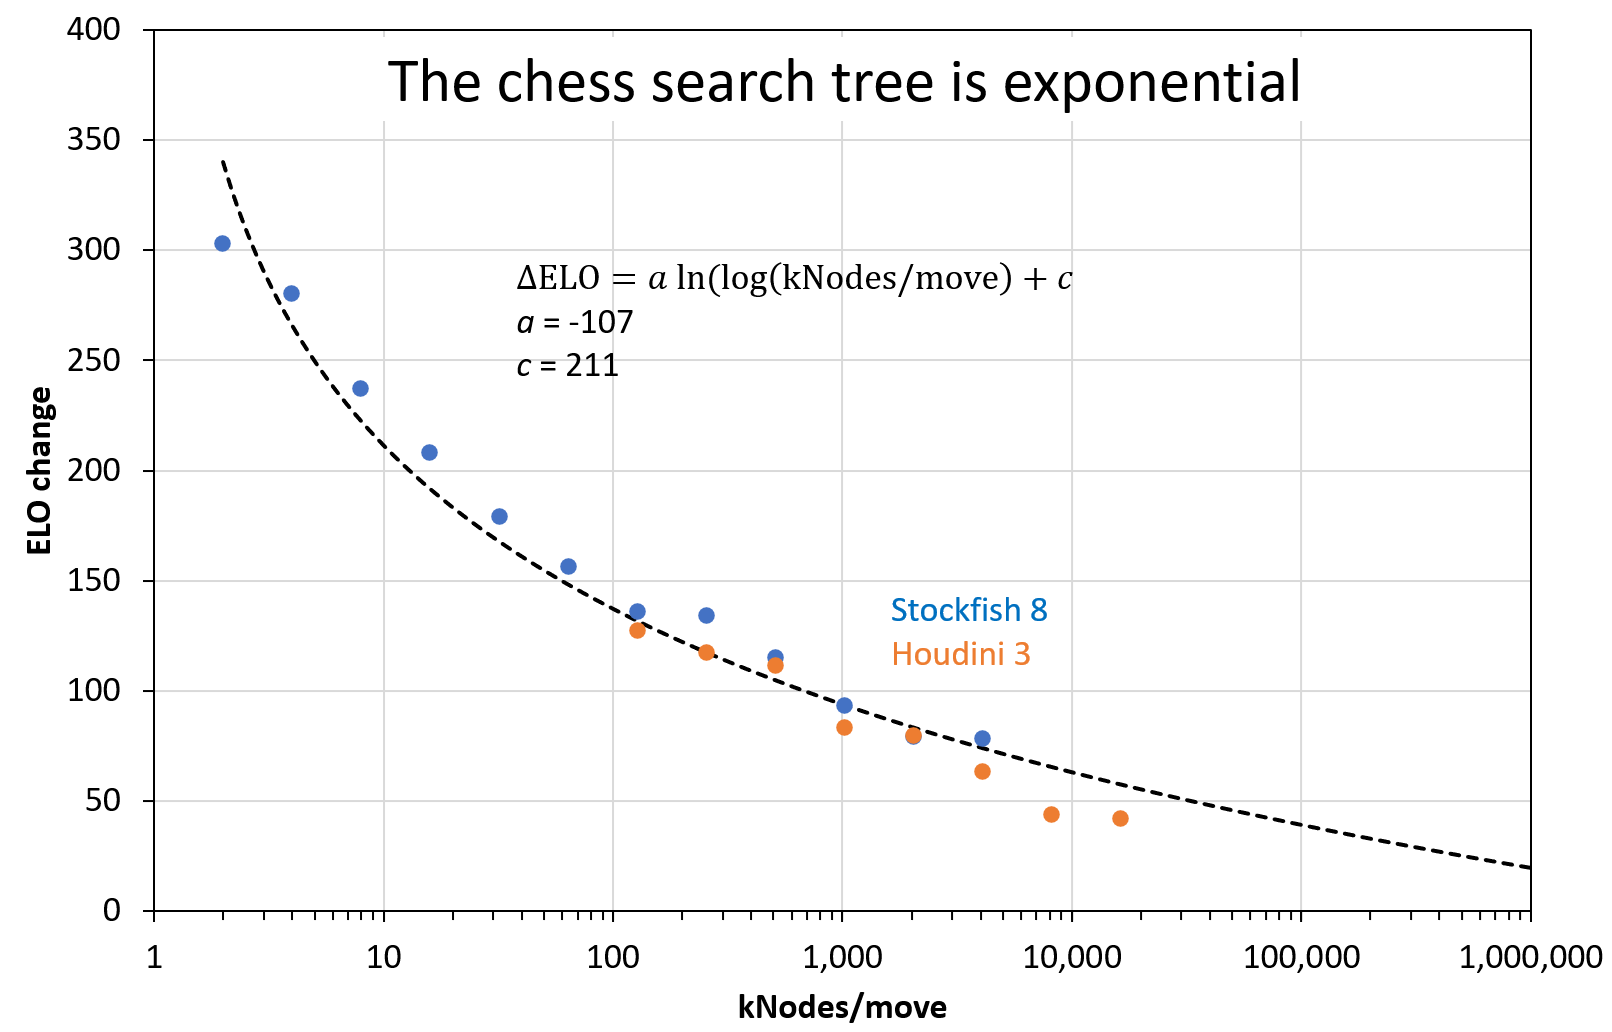 First Test Elektro 1.2 - Jurek Chess Engines Rating ( 2014.11.19 -  2014.11.20)